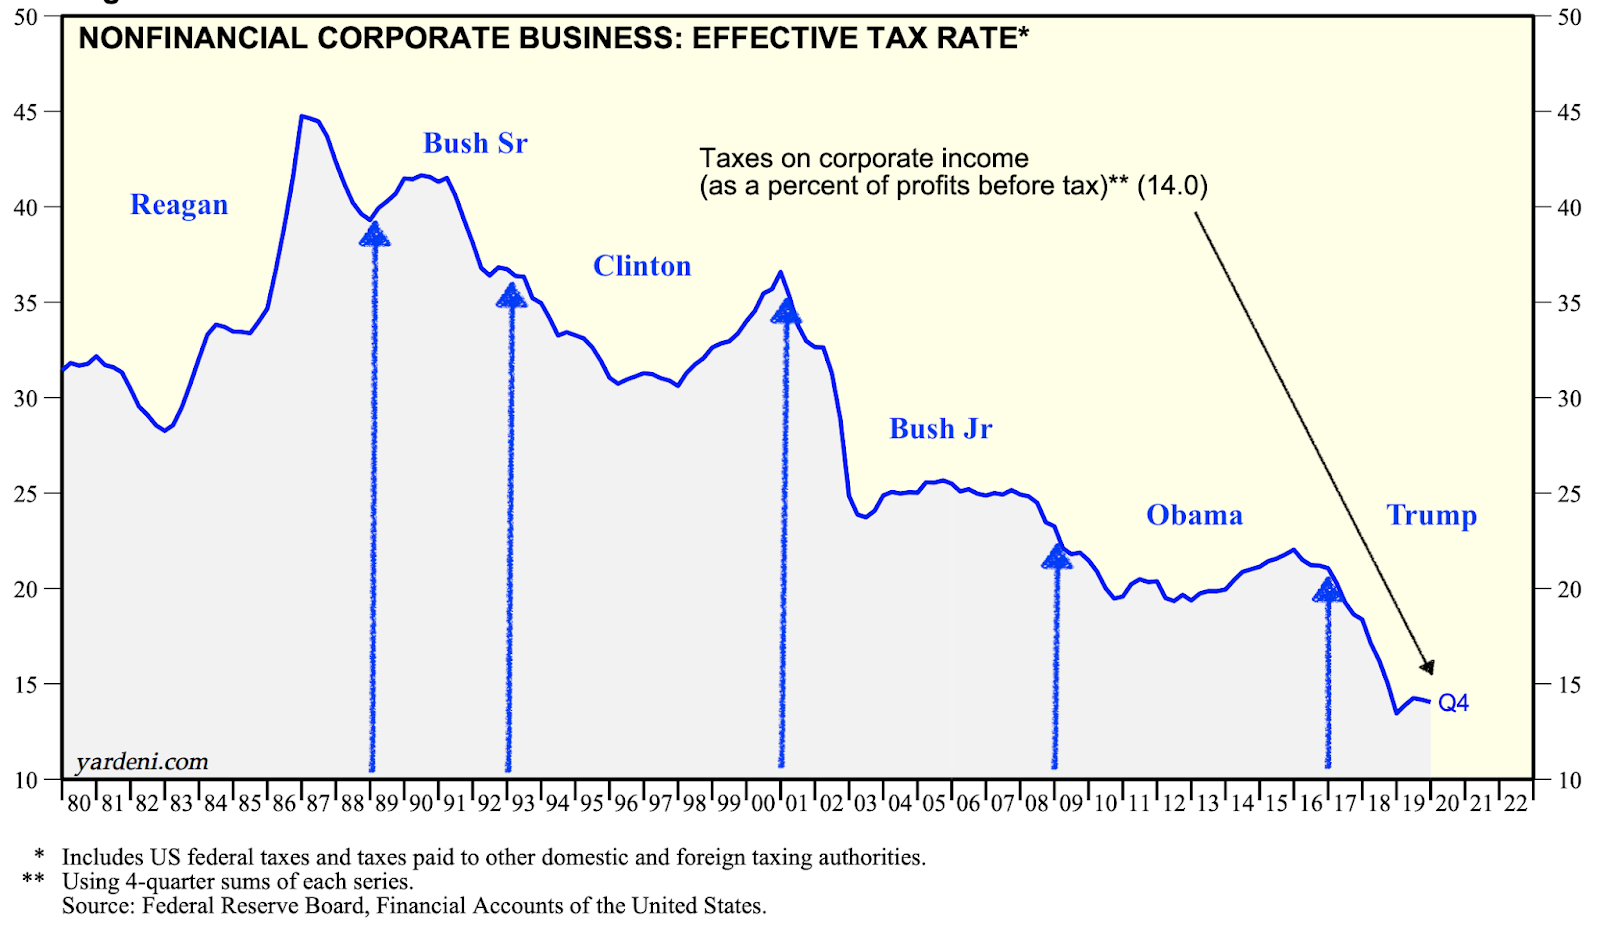 true-economics-5-4-20-effective-corporate-tax-rates-in-the-u-s-1980